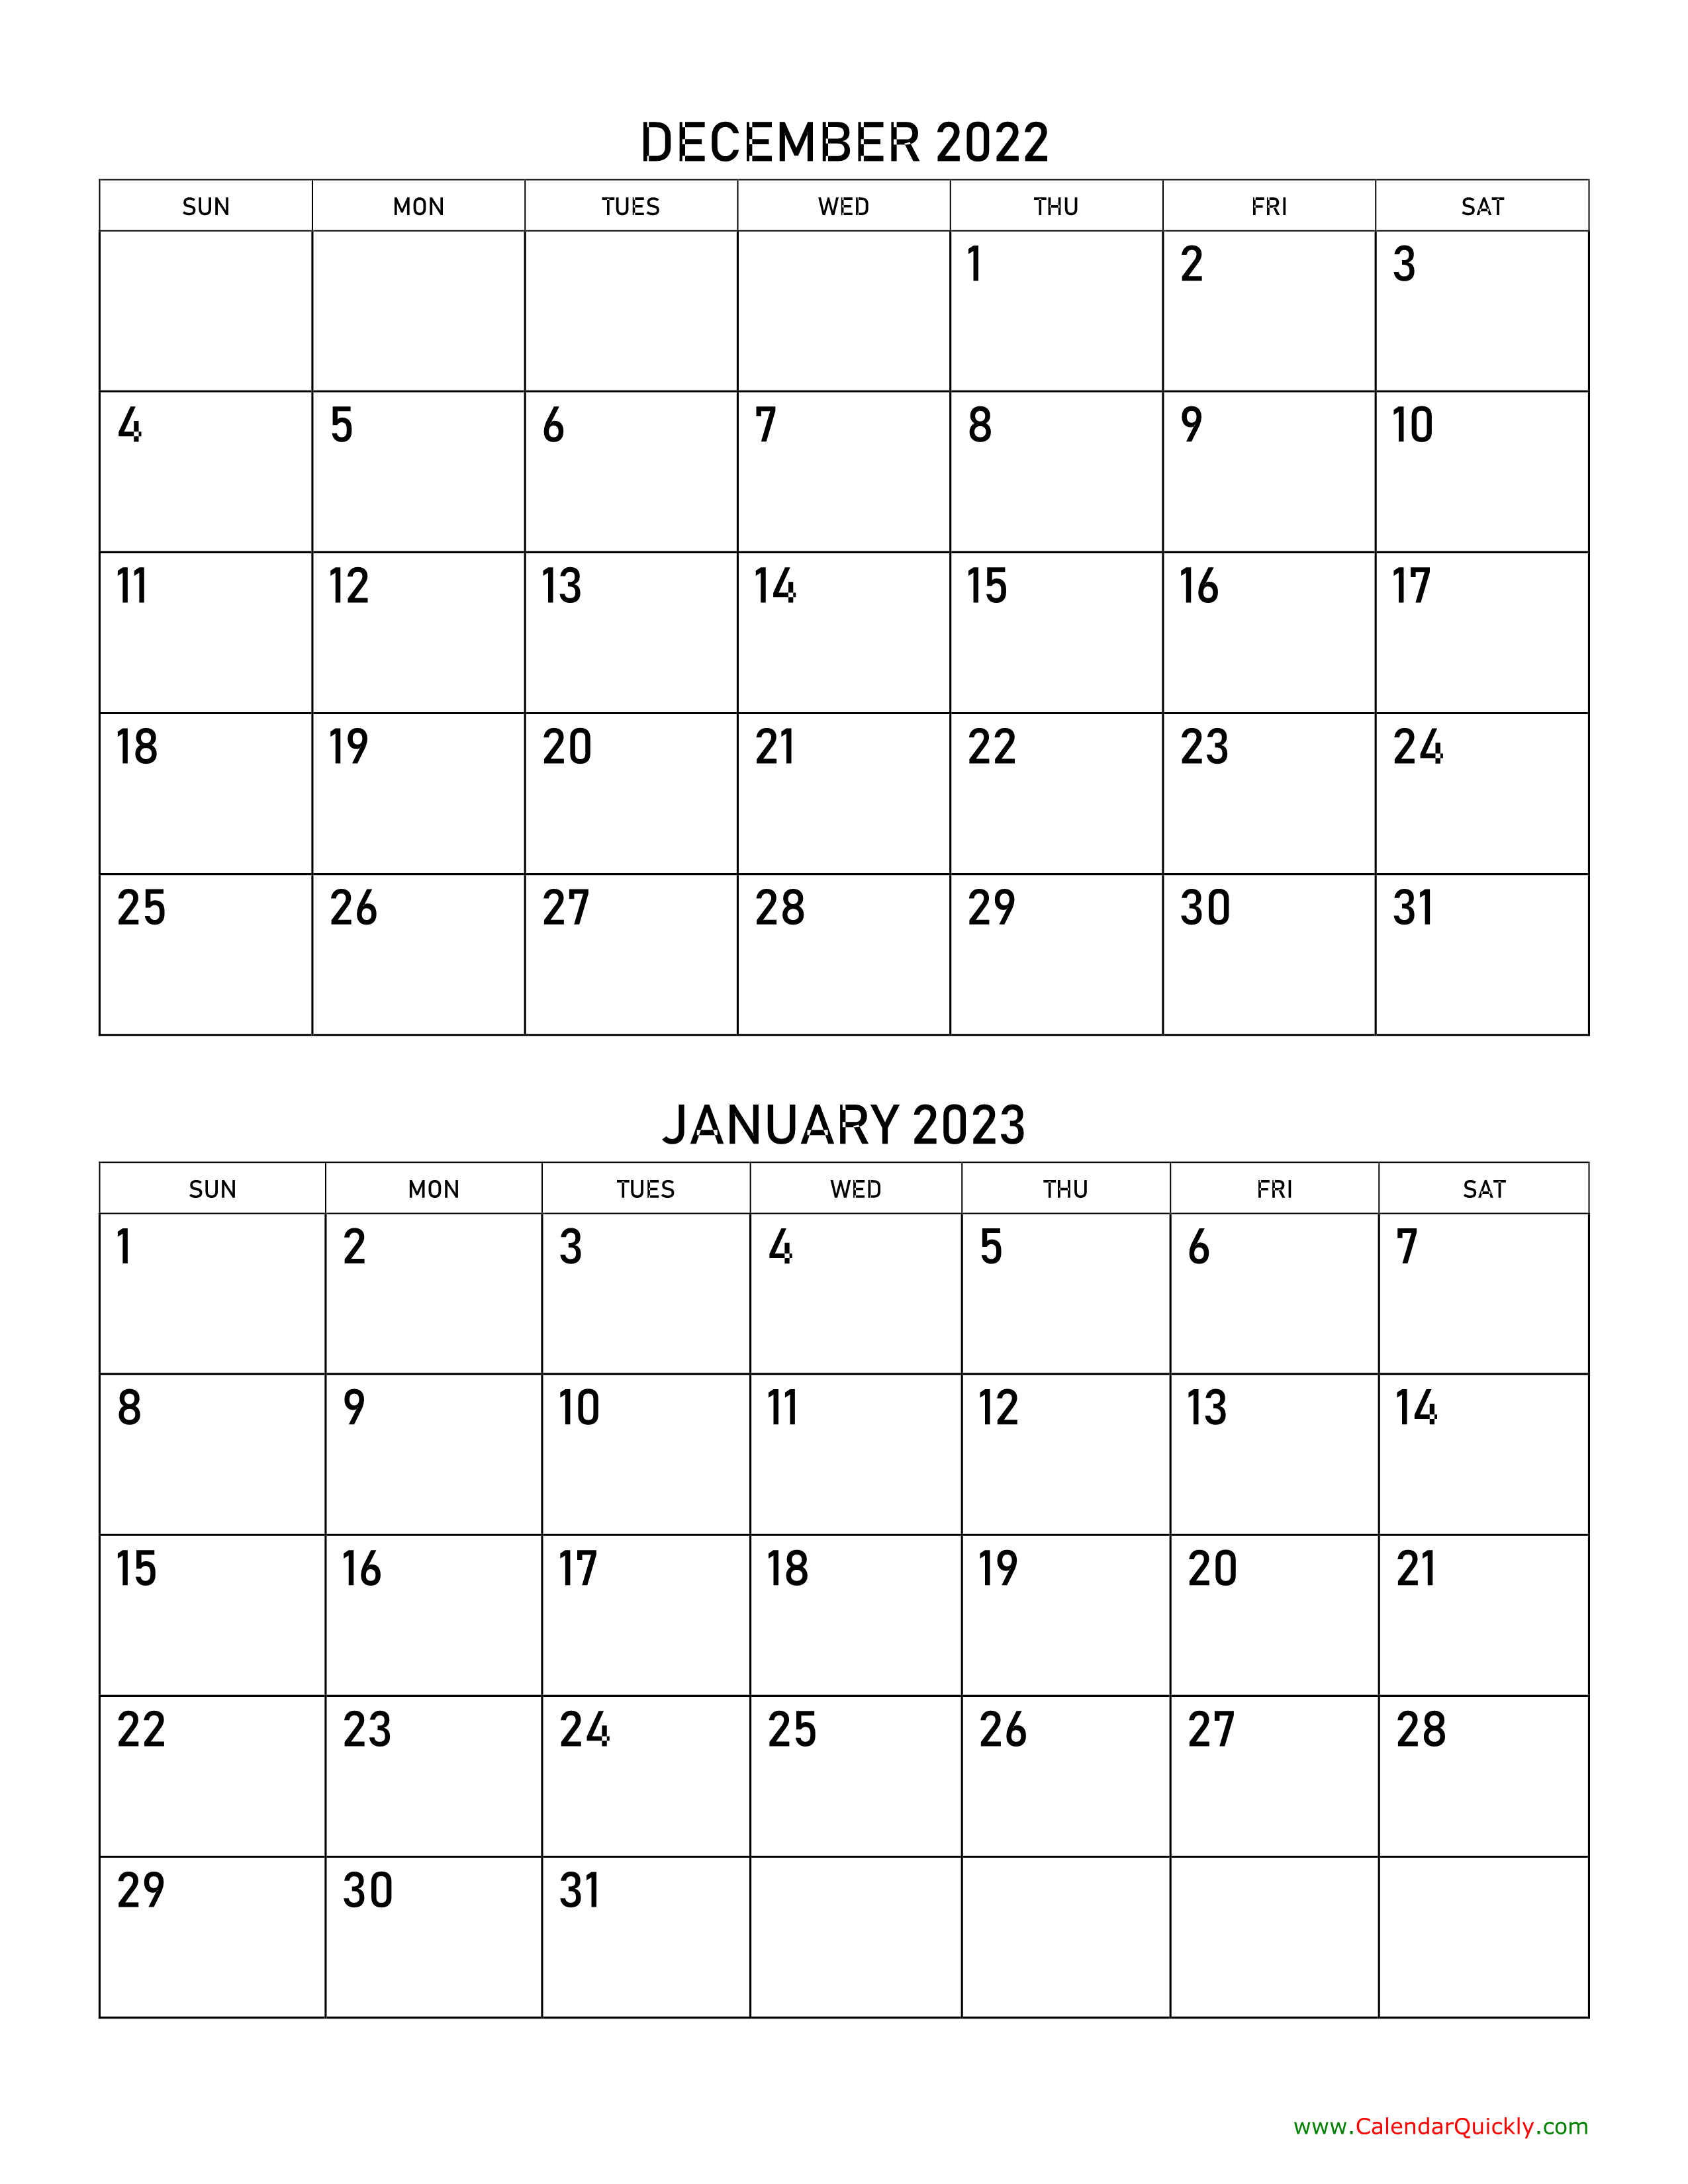 December 2022 and January 2023 Calendar Calendar Quickly